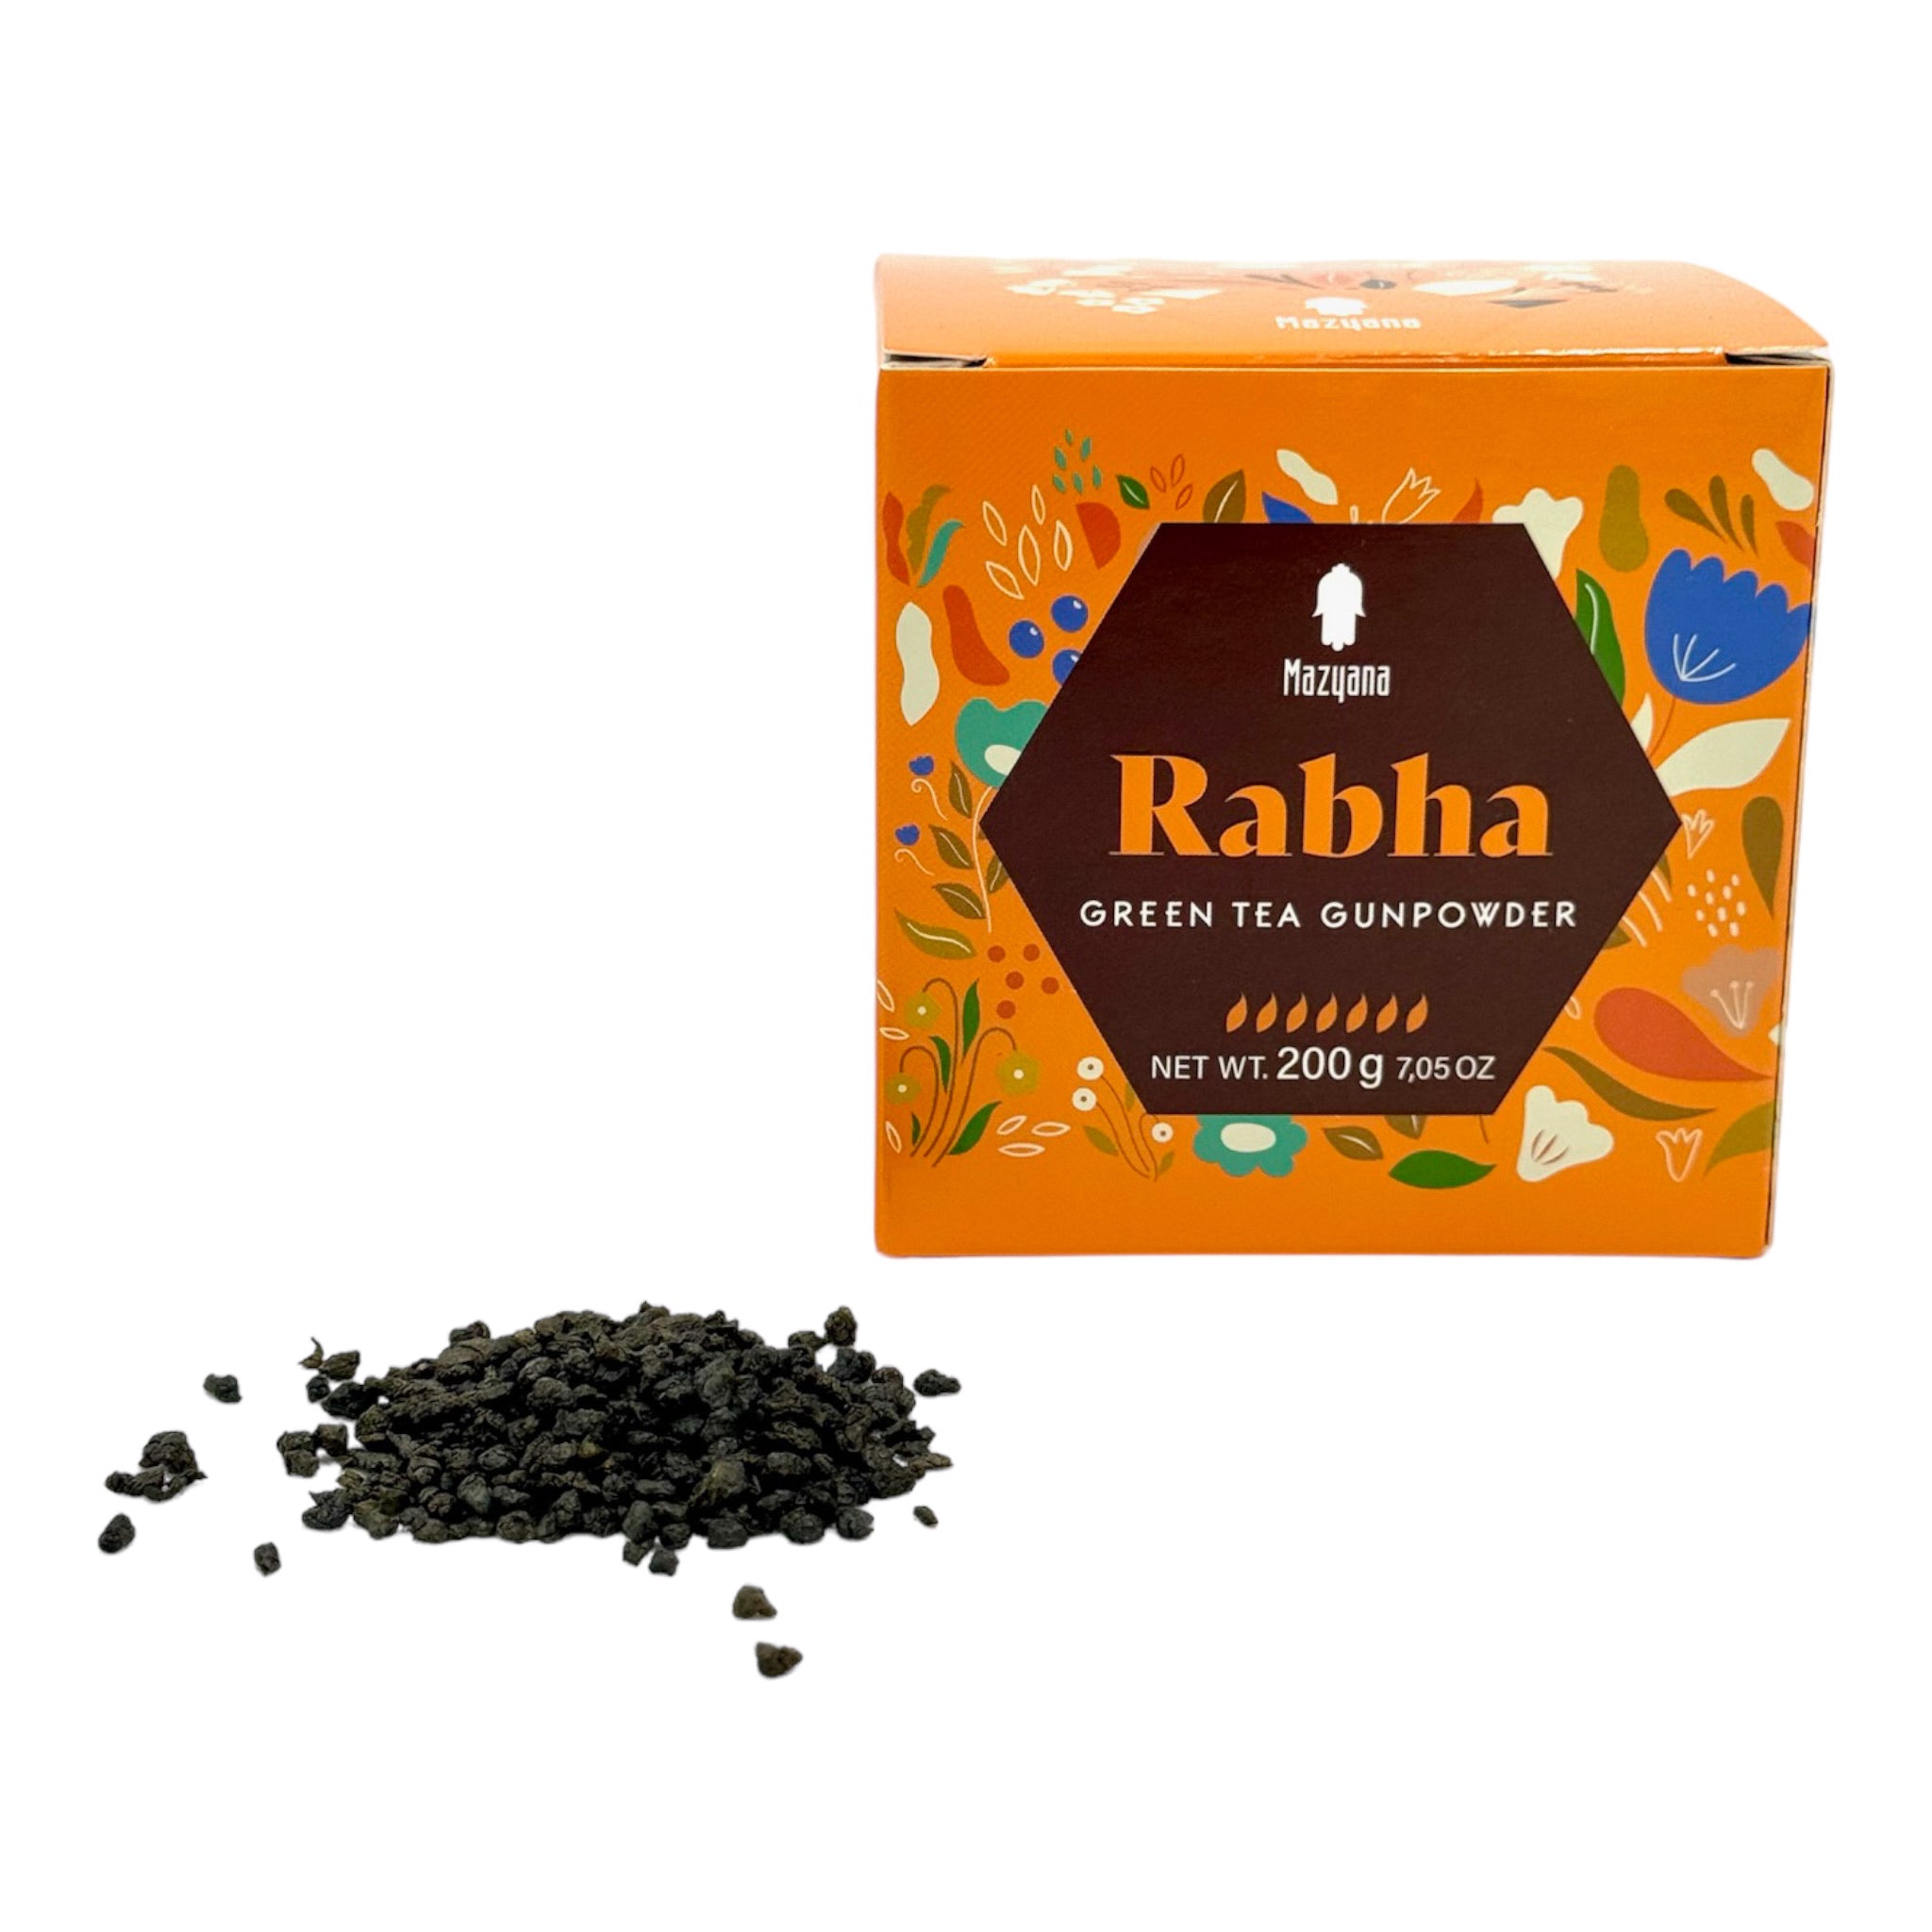 Rabha Gunpowder Green Tea by Mazyana Brand